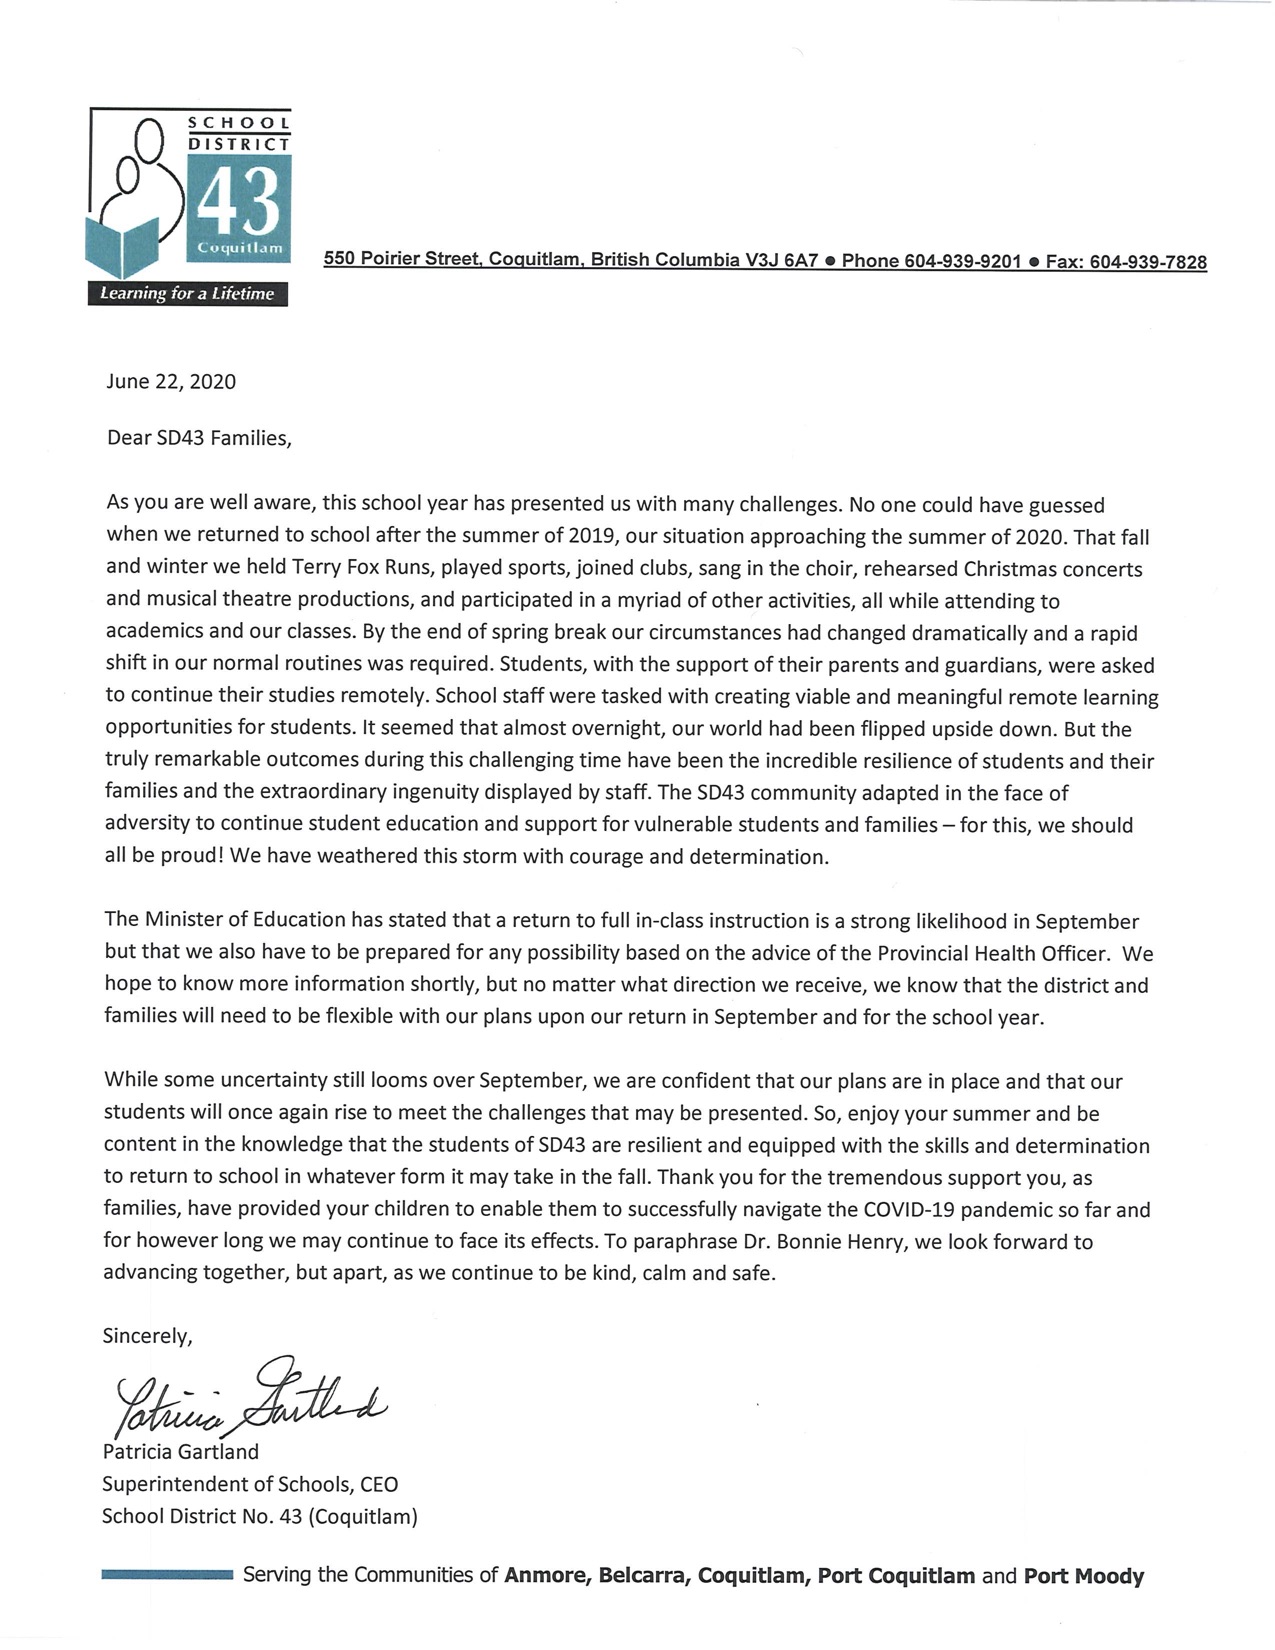 Superintendent's Letter to Families June 2020.jpg